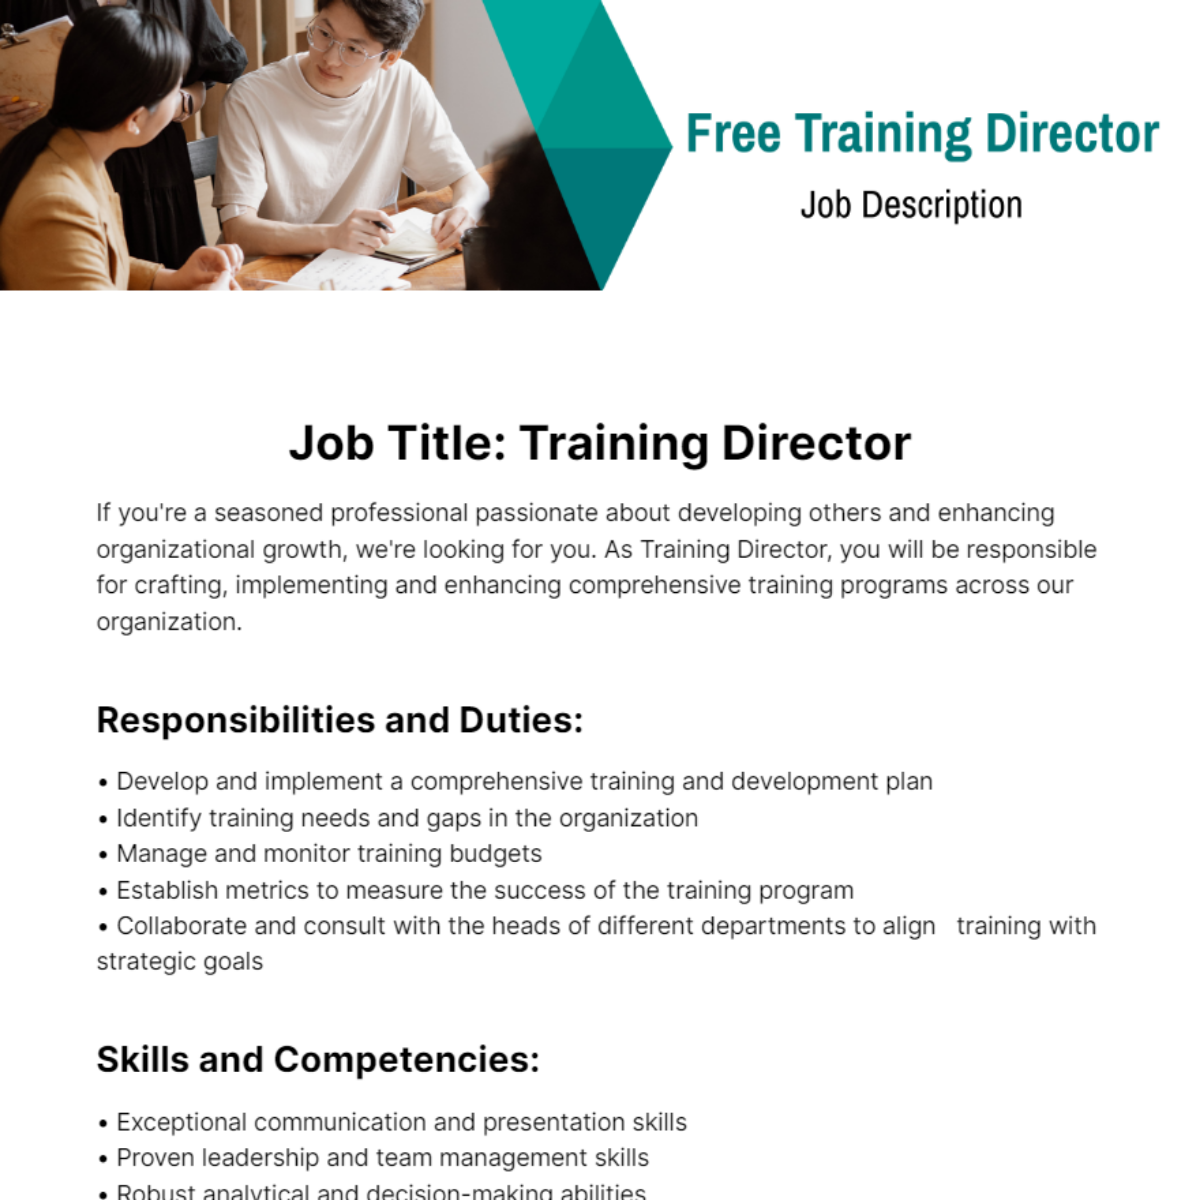 Free Training Director Job Description Template